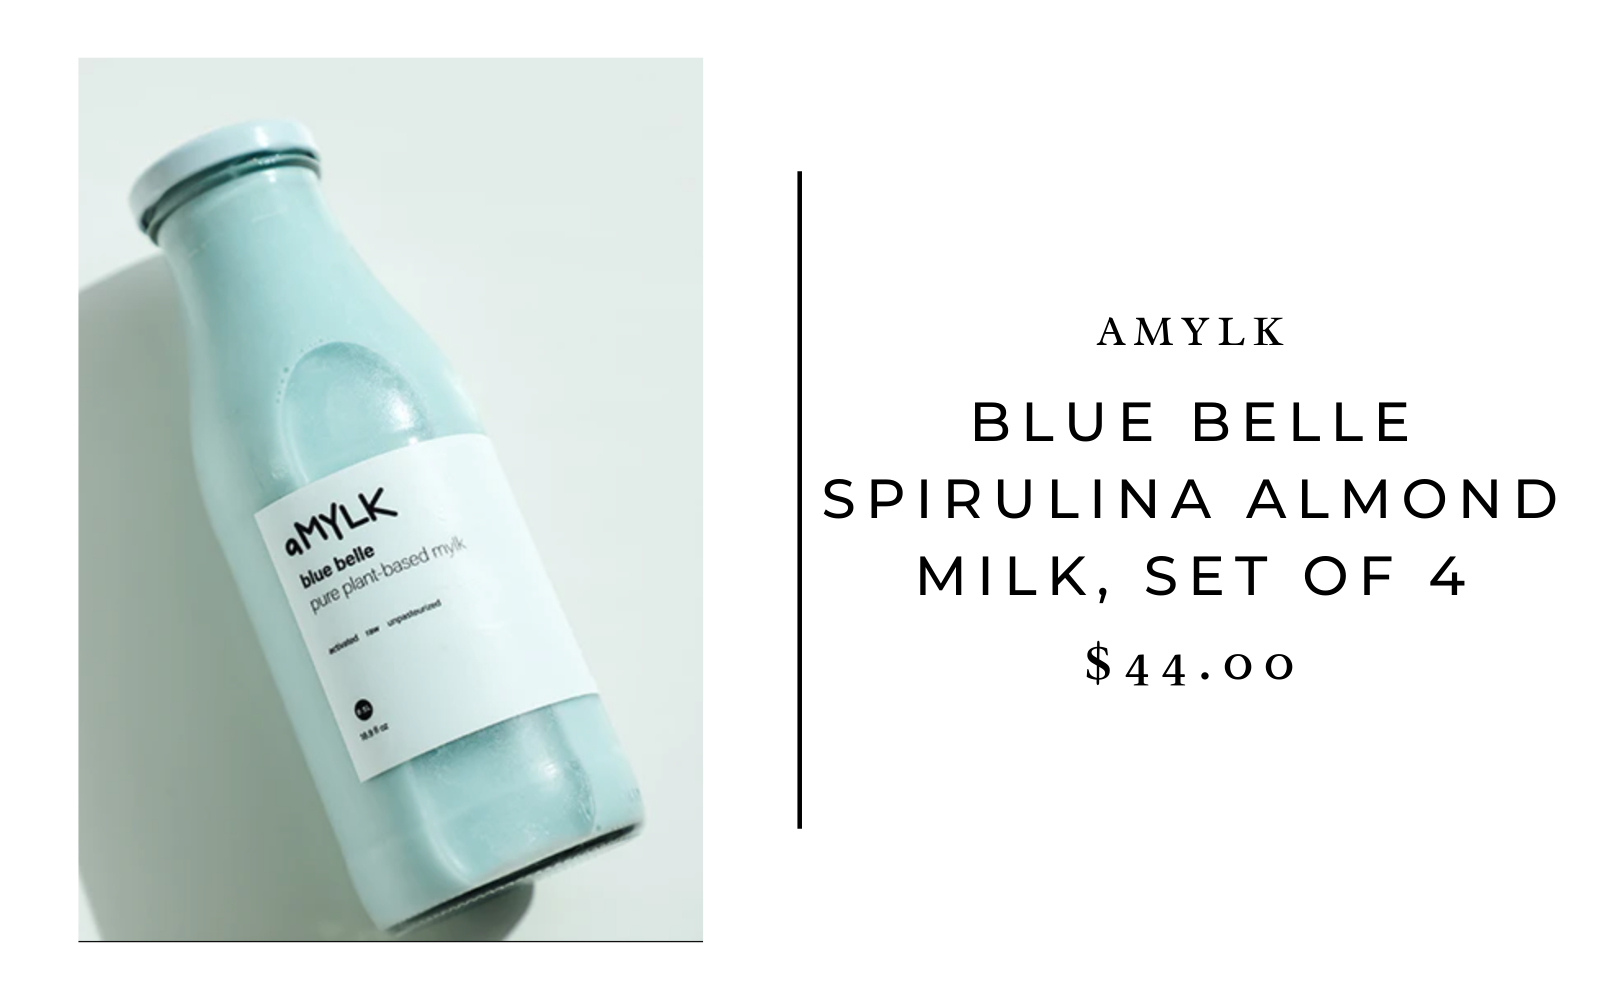 amylk blue belle almond milk - wellness products